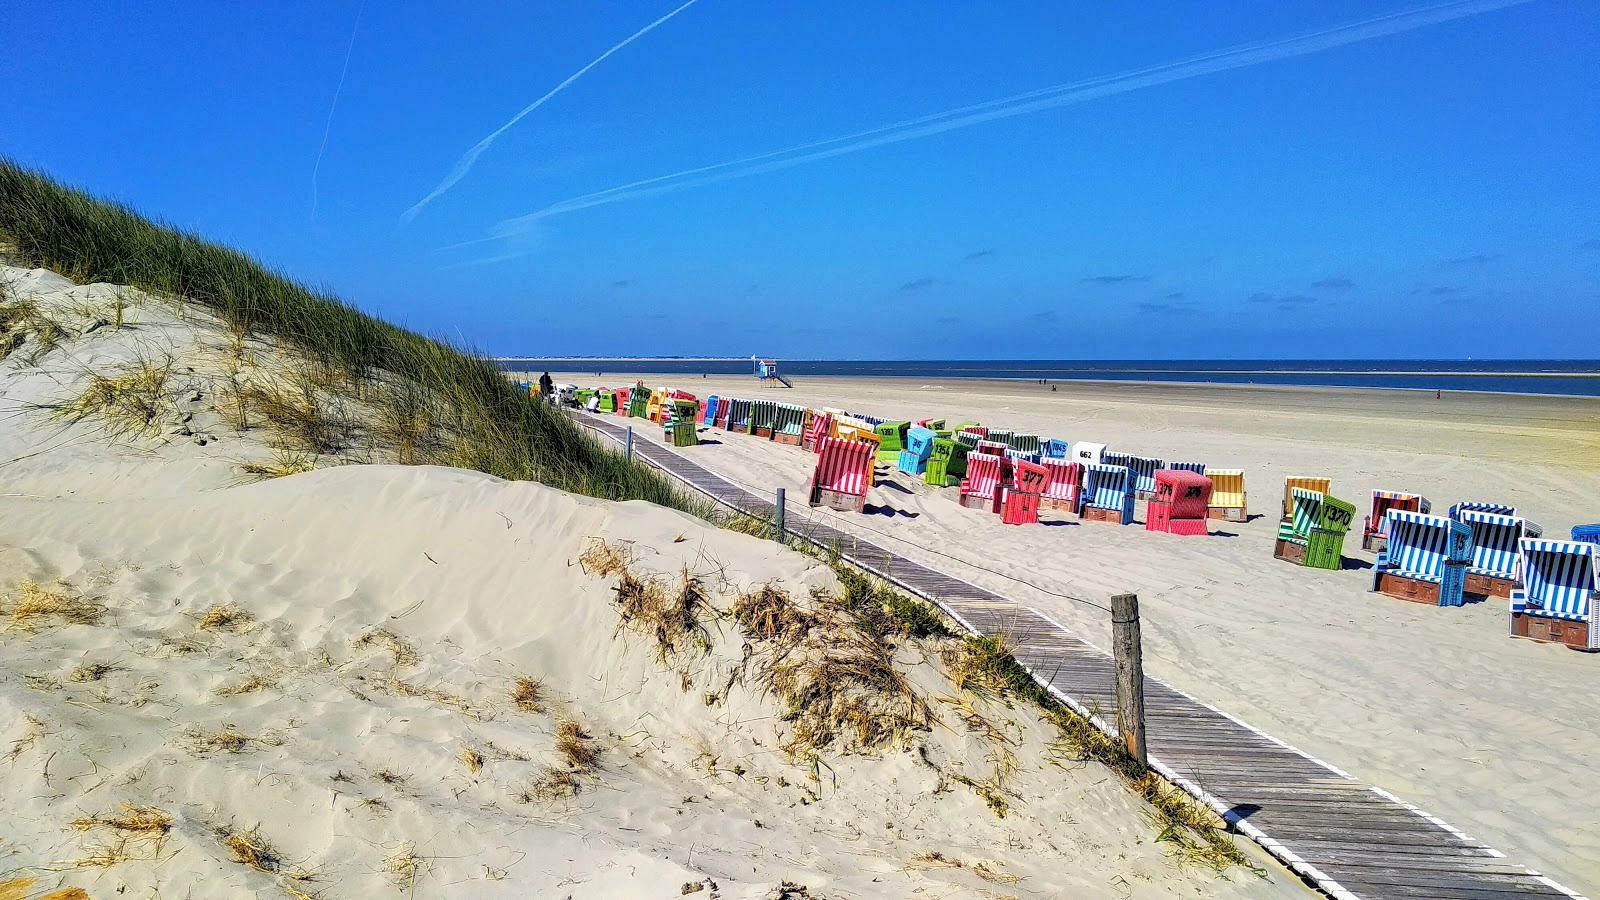  Langeoog  strand - Germany